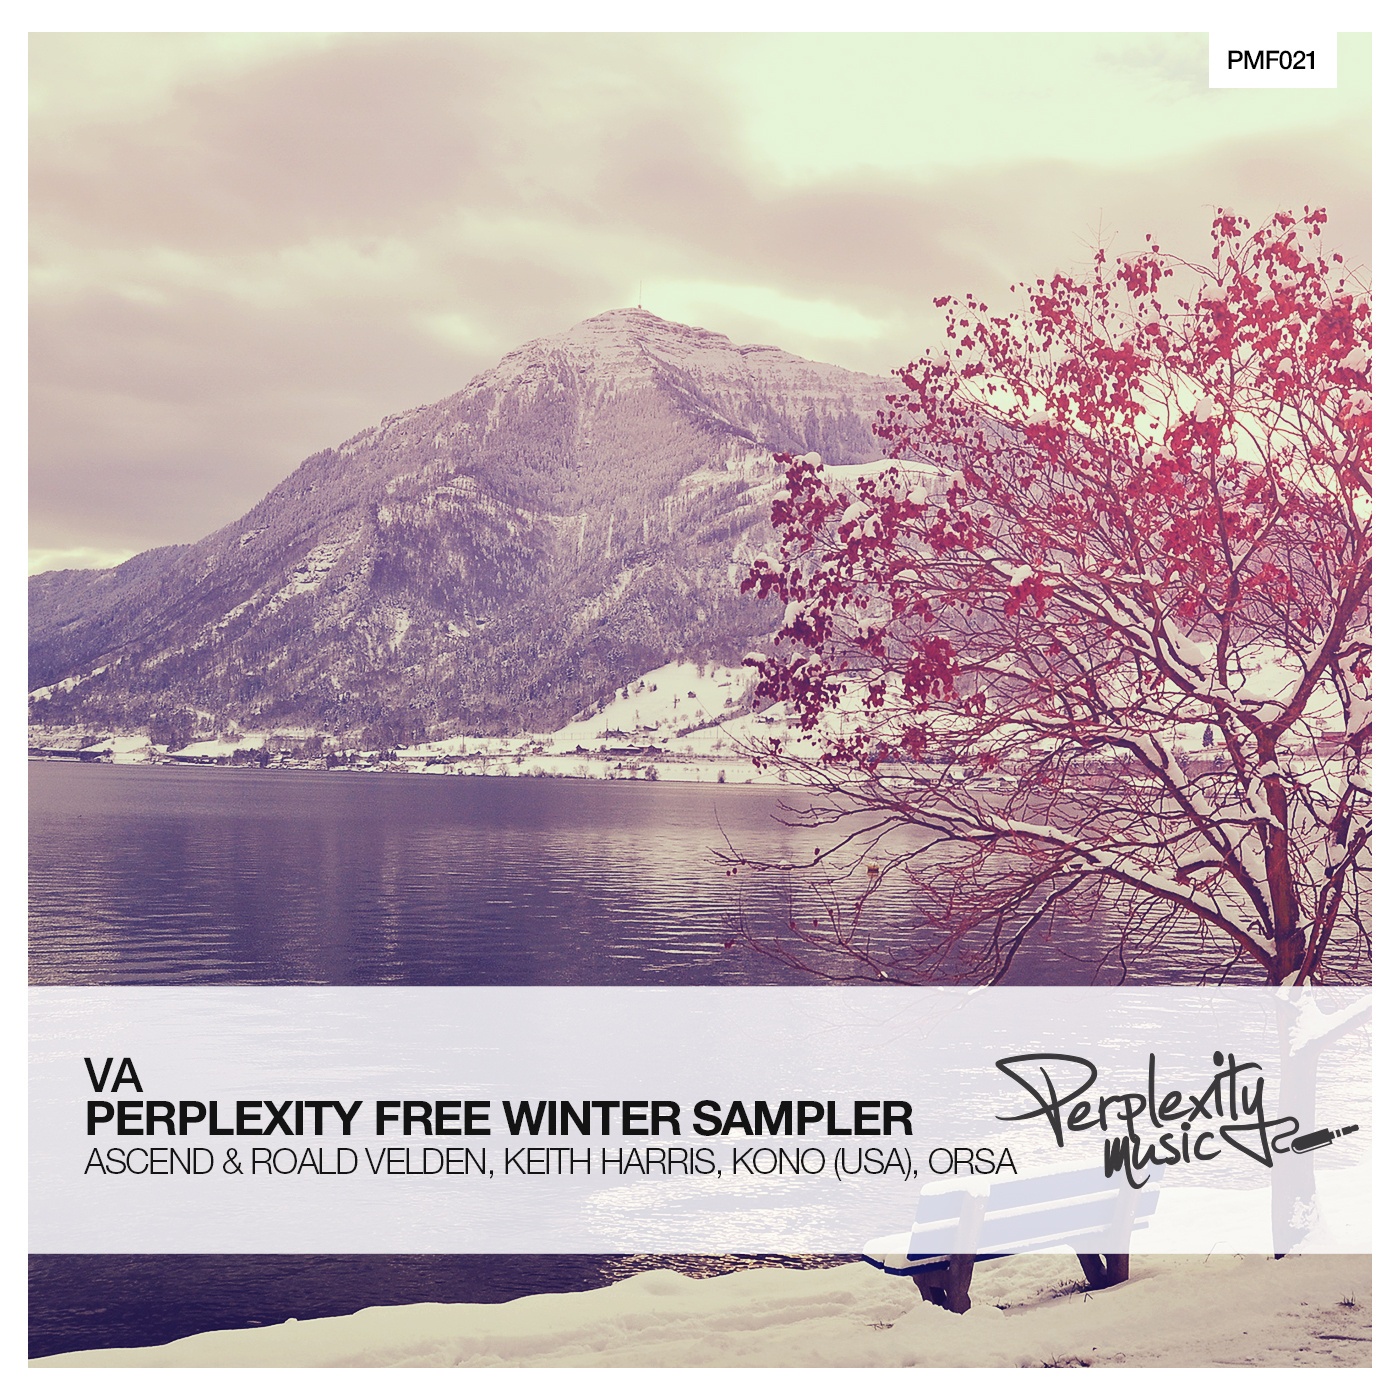 Perplexity Free Winter Sampler #001